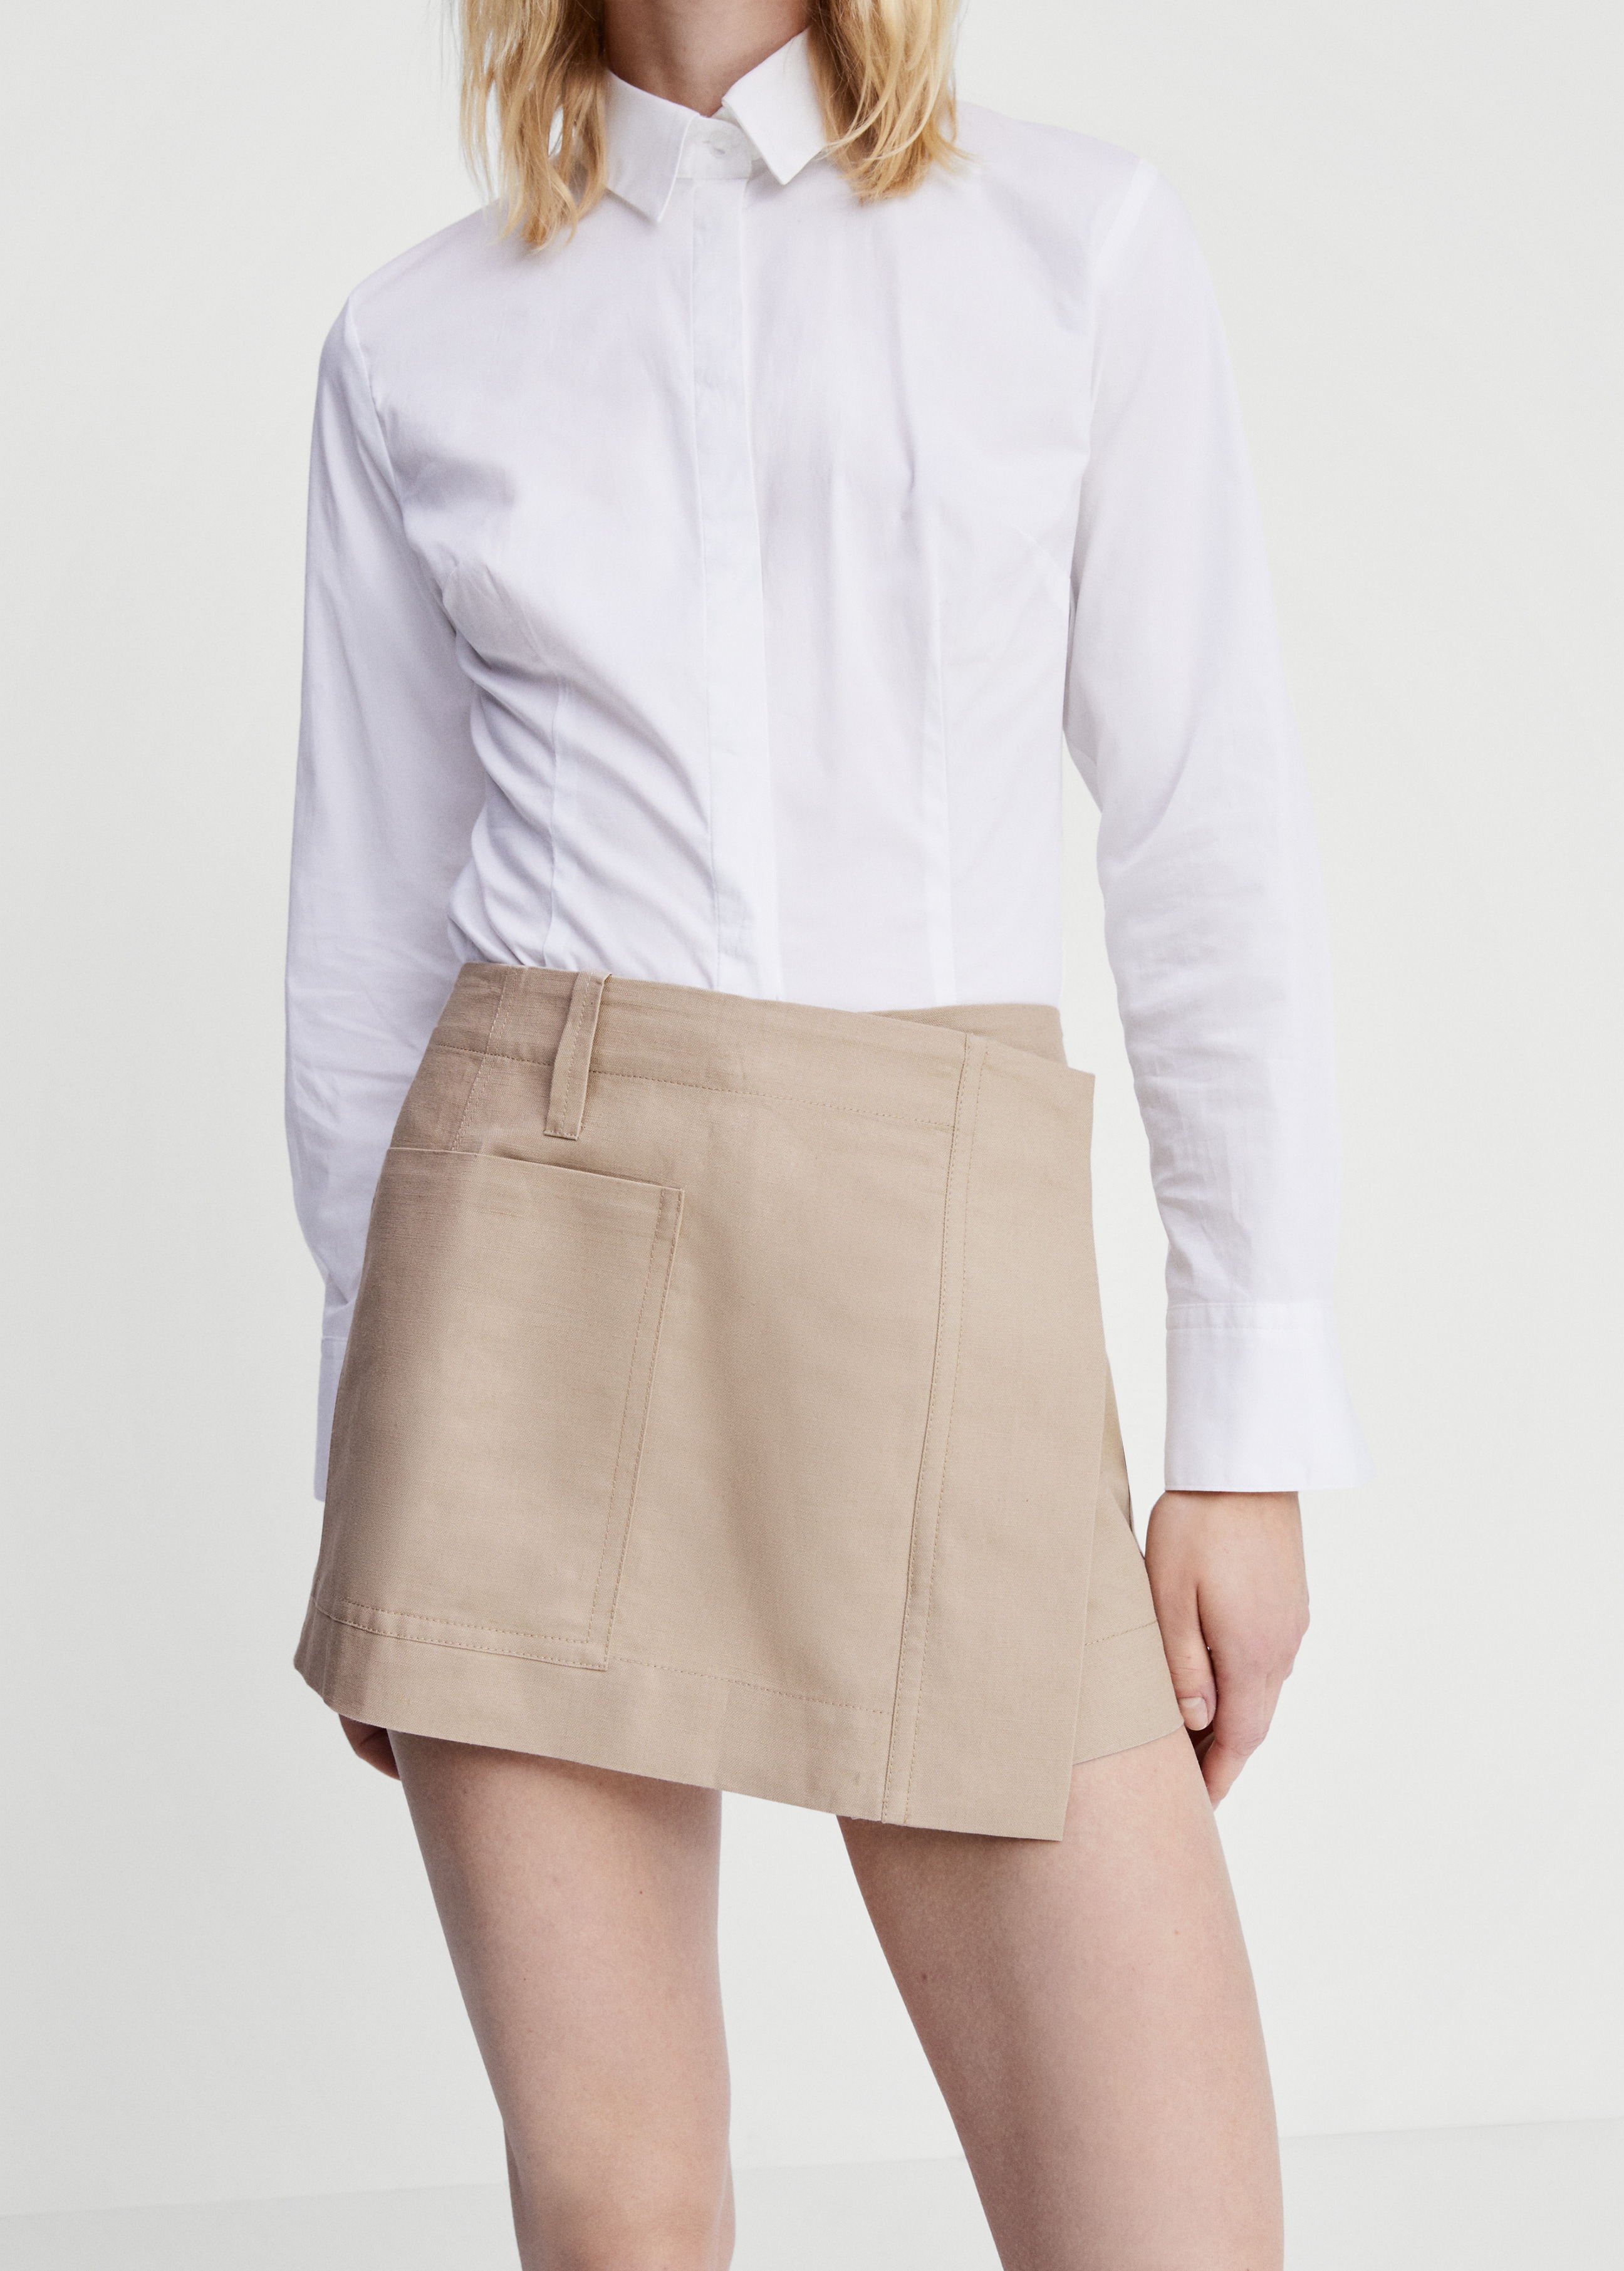 Wrap mini-skirt with pockets - Medium plane